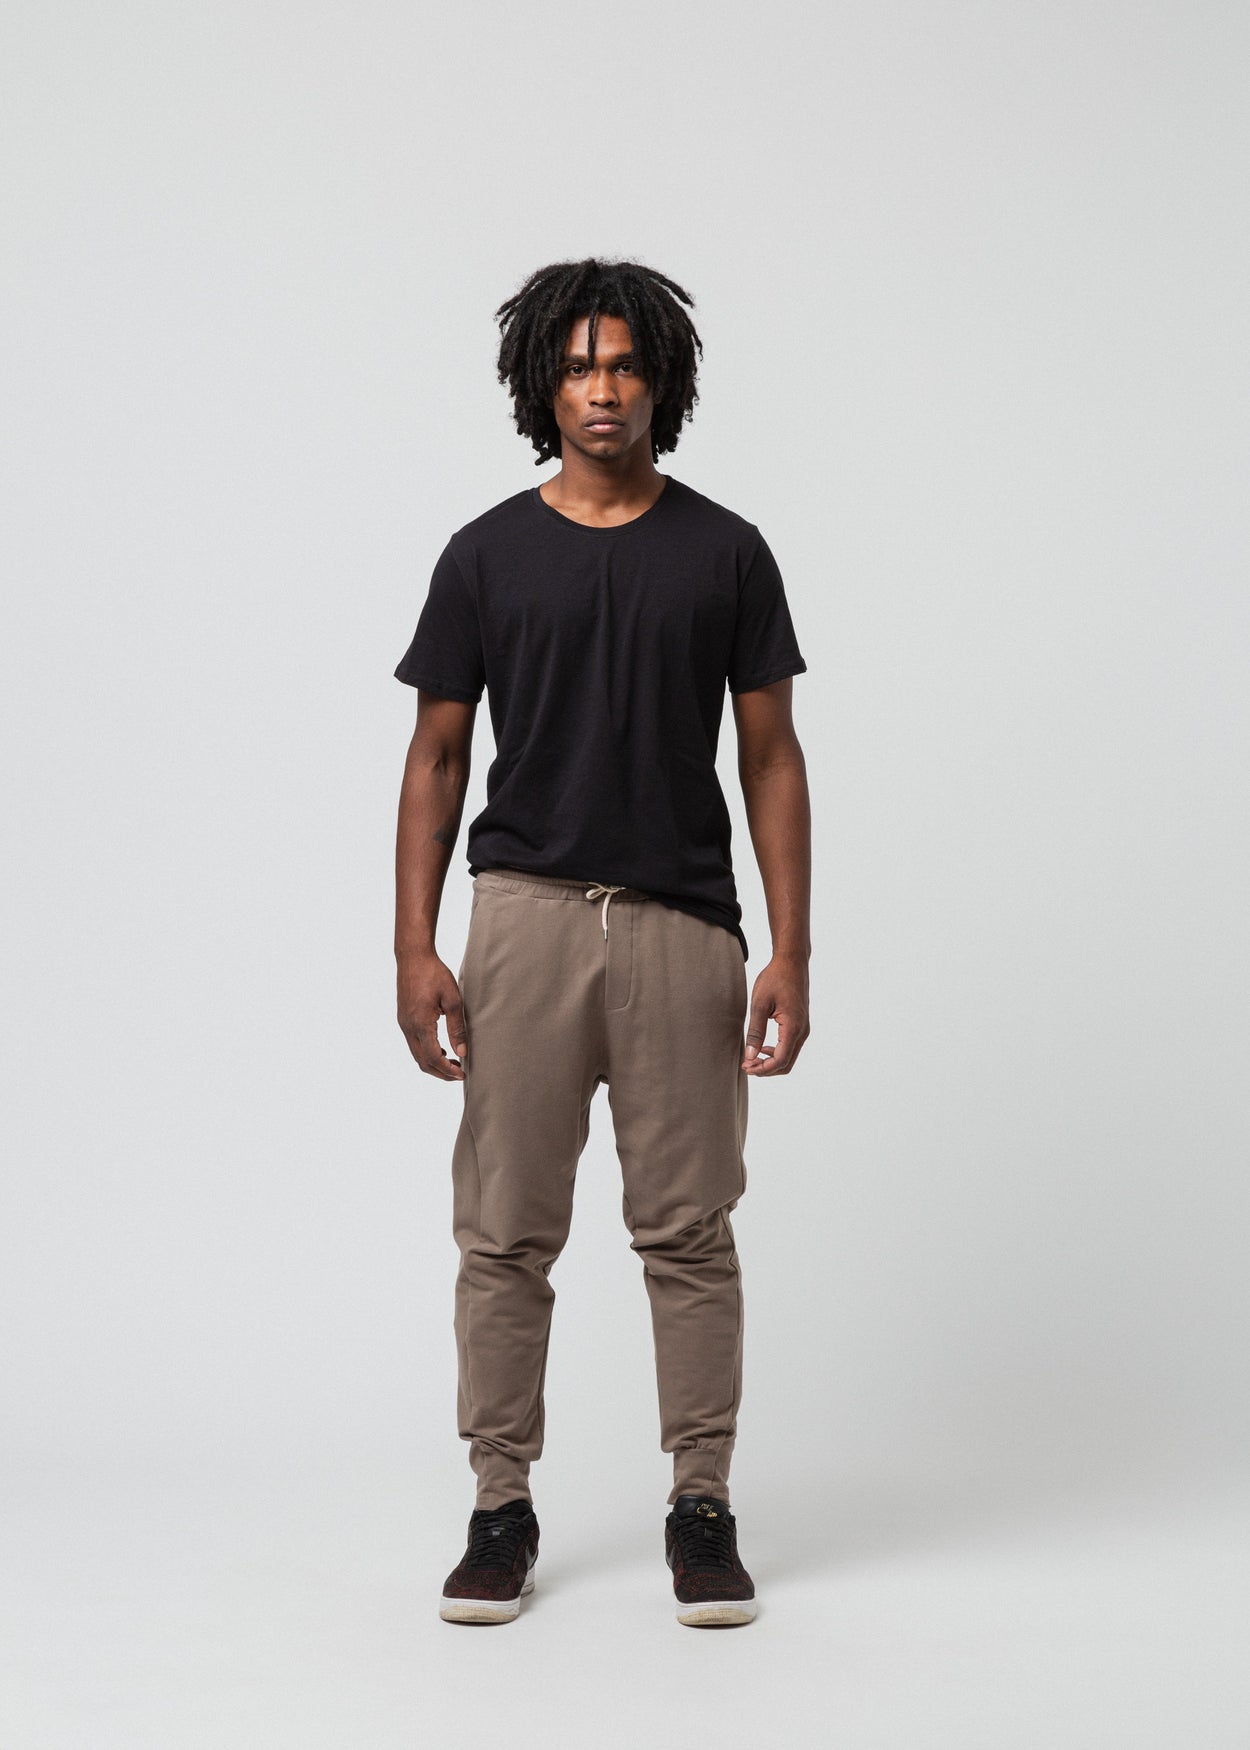 Two-sided Khaki Sweatpants